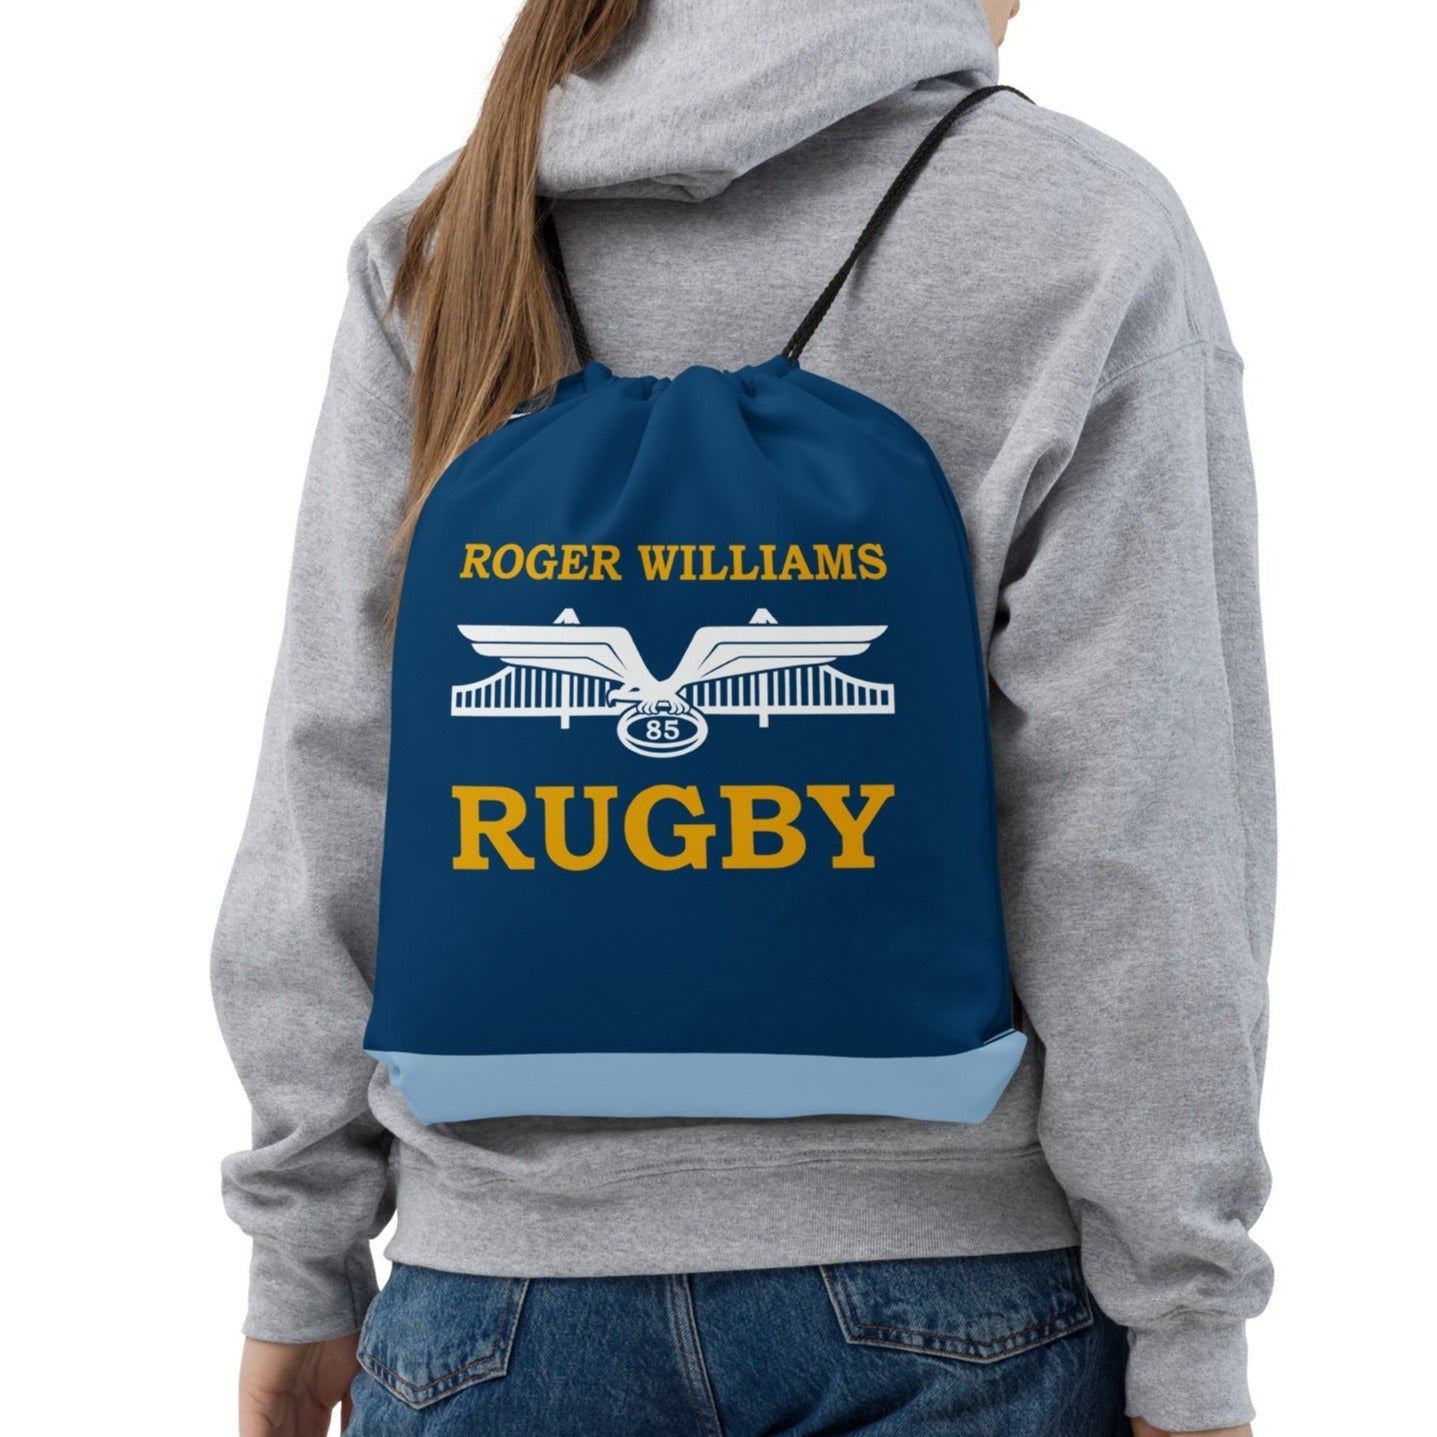 Rugby Imports Roger Williams RFC Drawstring Bag